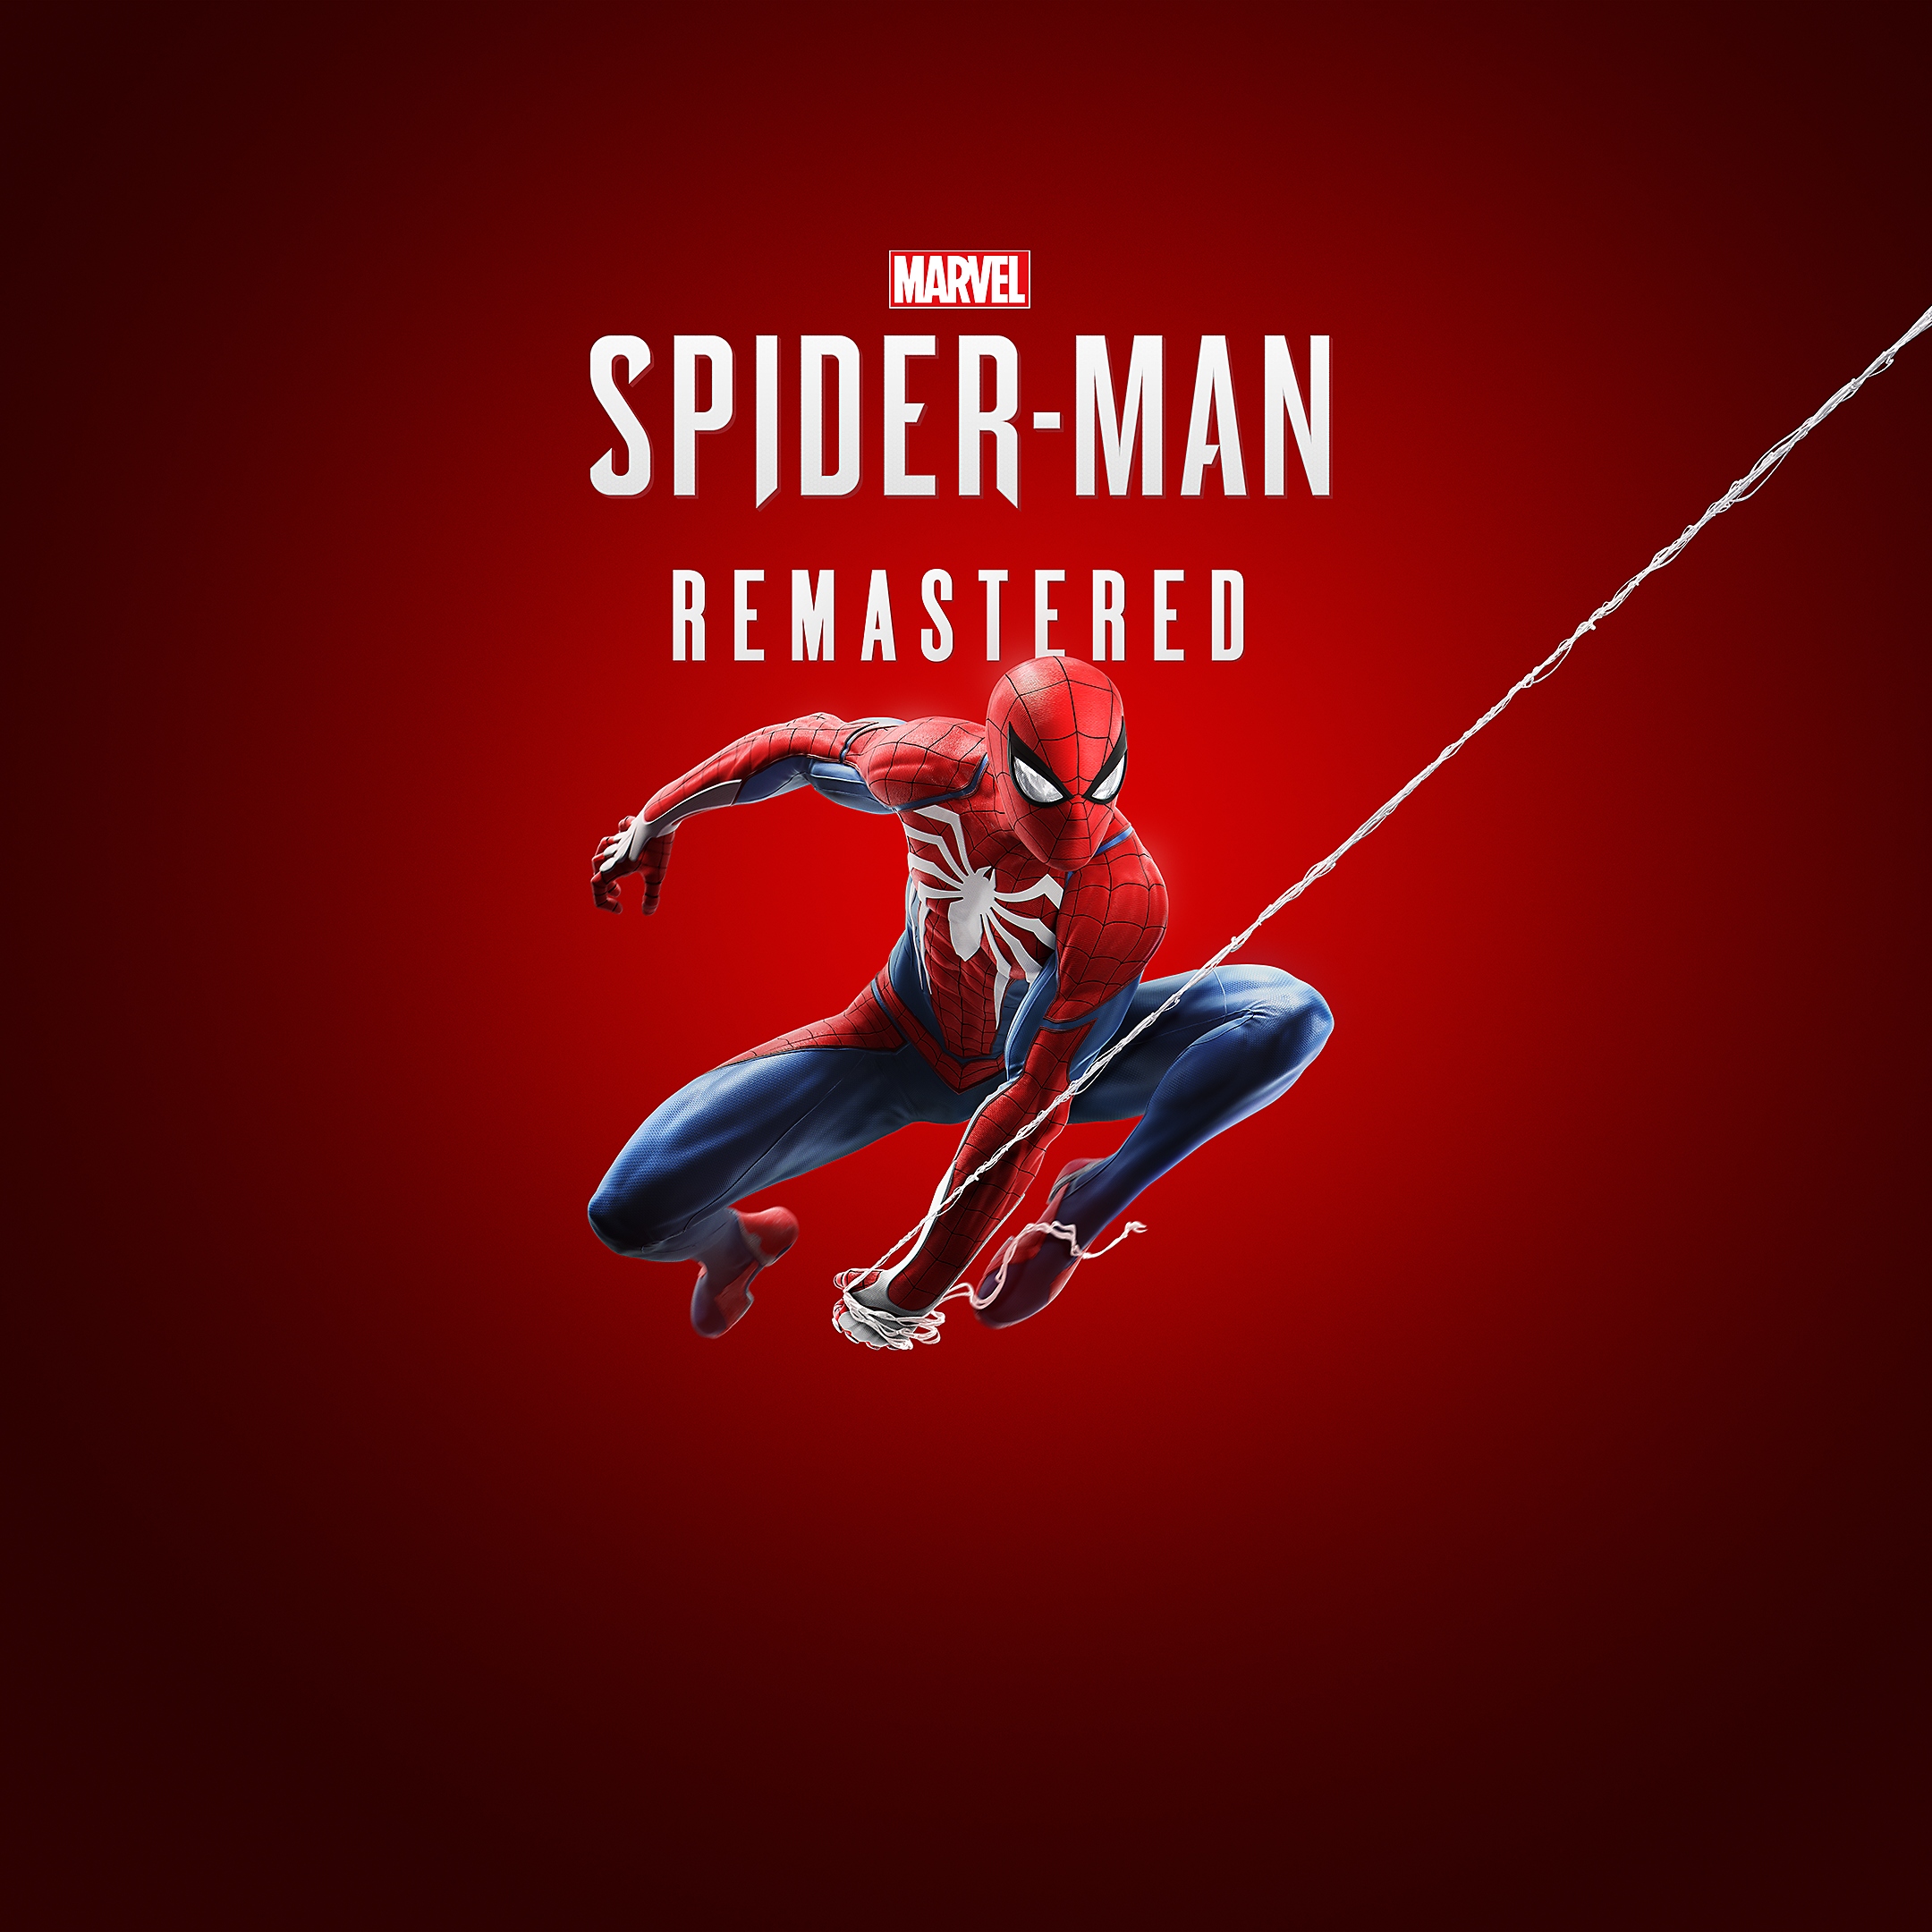 《Marvel’s Spider-Man Remastered》遊戲縮圖影像